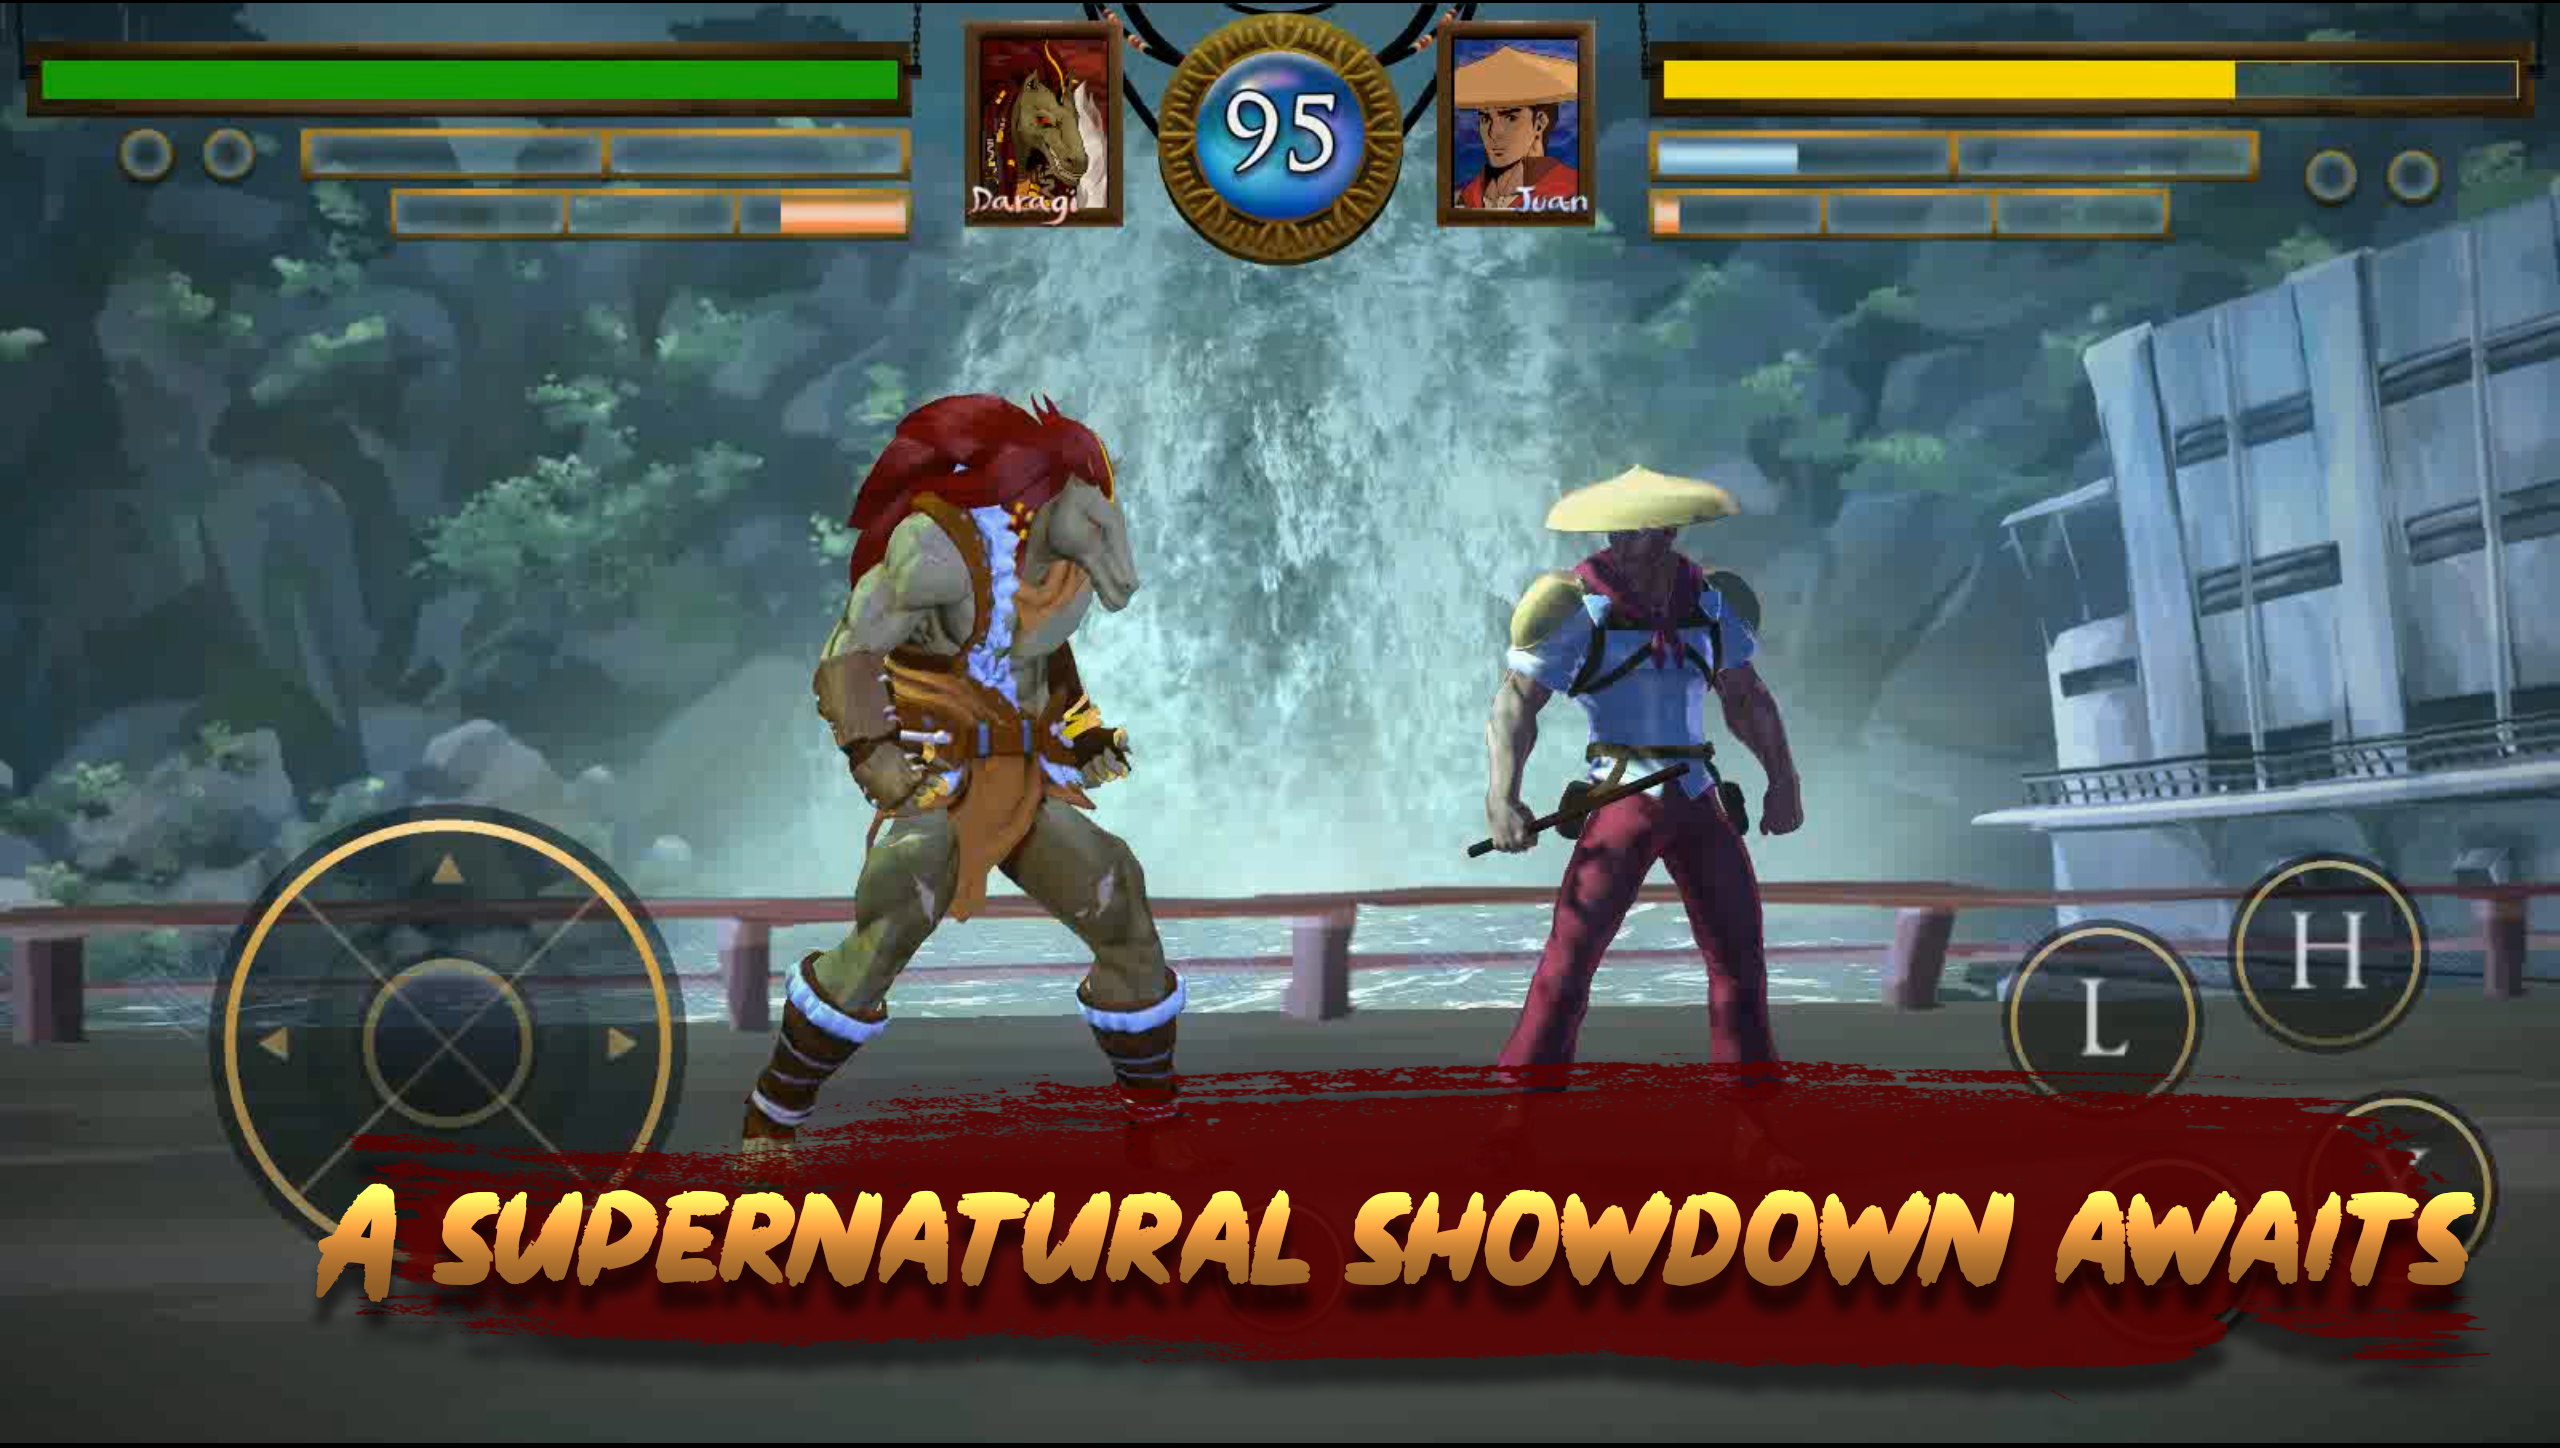 Screenshot 1 of Juego de lucha SINAG 3.1.1f45